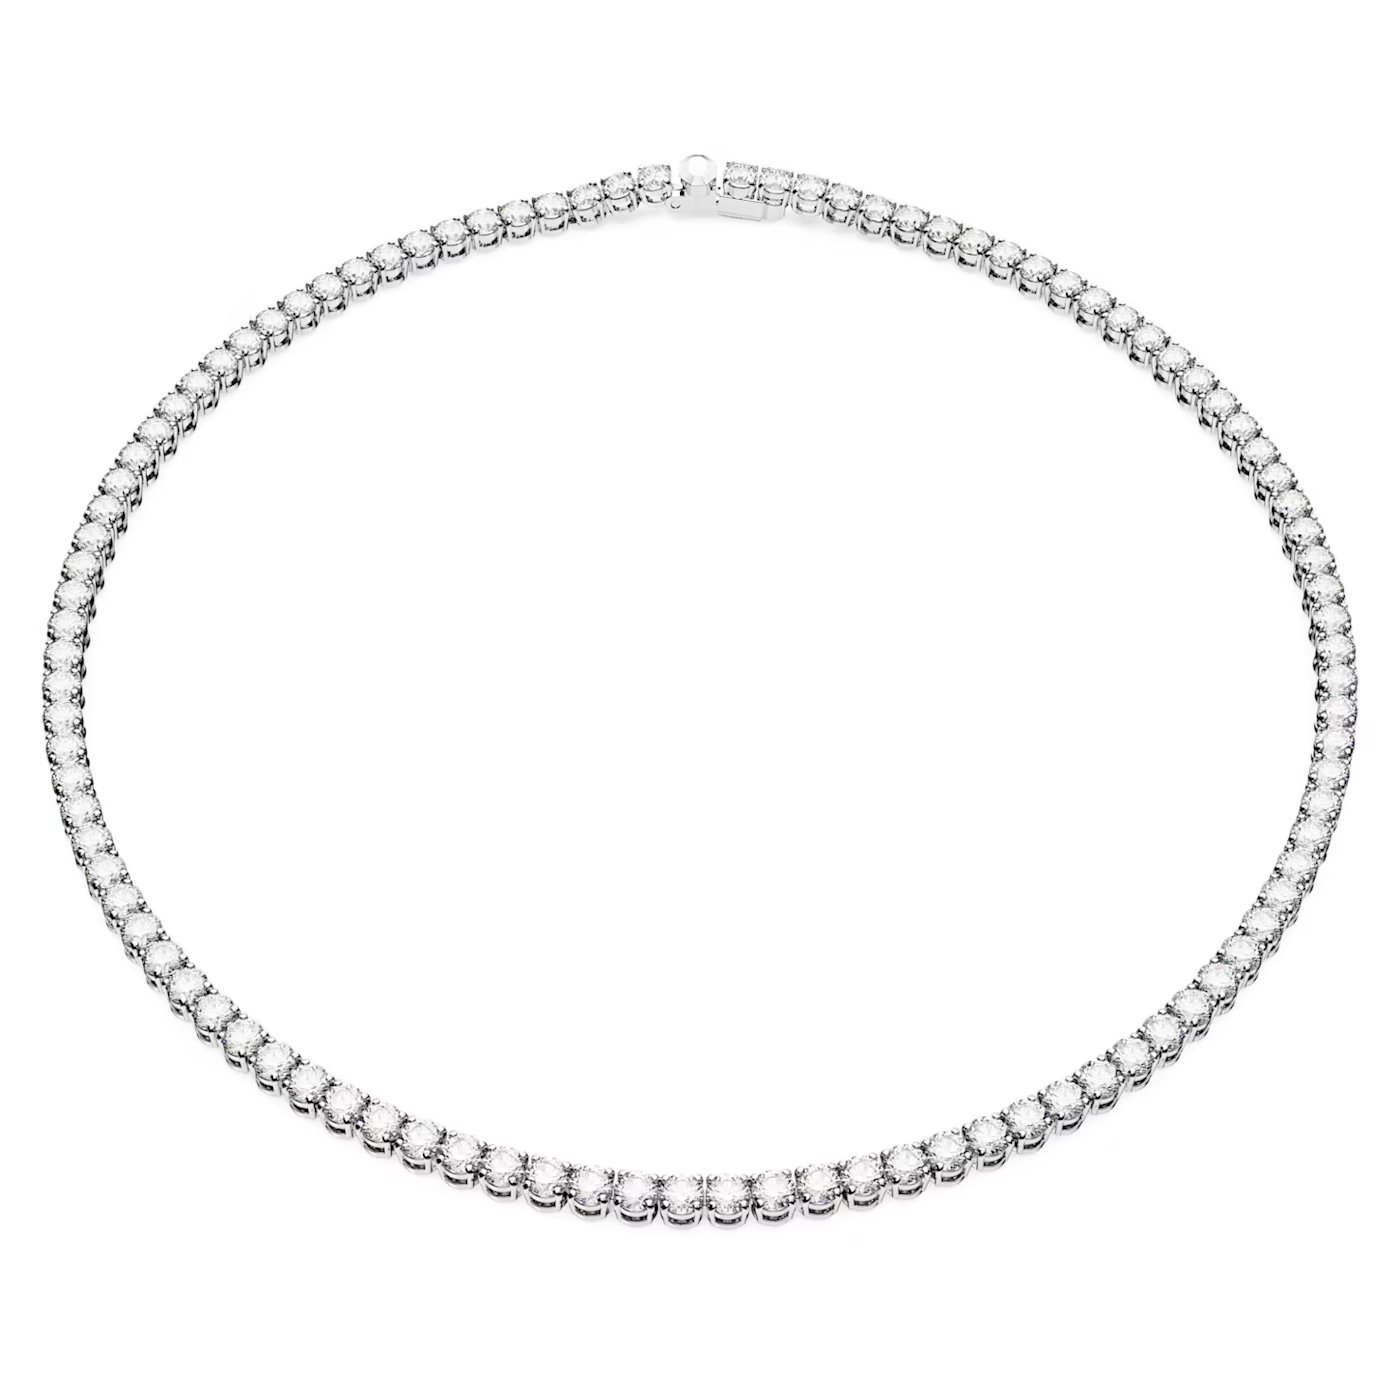 64b6c4c2d08c5_6457a996d7d6b_matrix-tennis-necklace--round-cut--small--white--rhodium-plated-swarovski-5681796.jpg